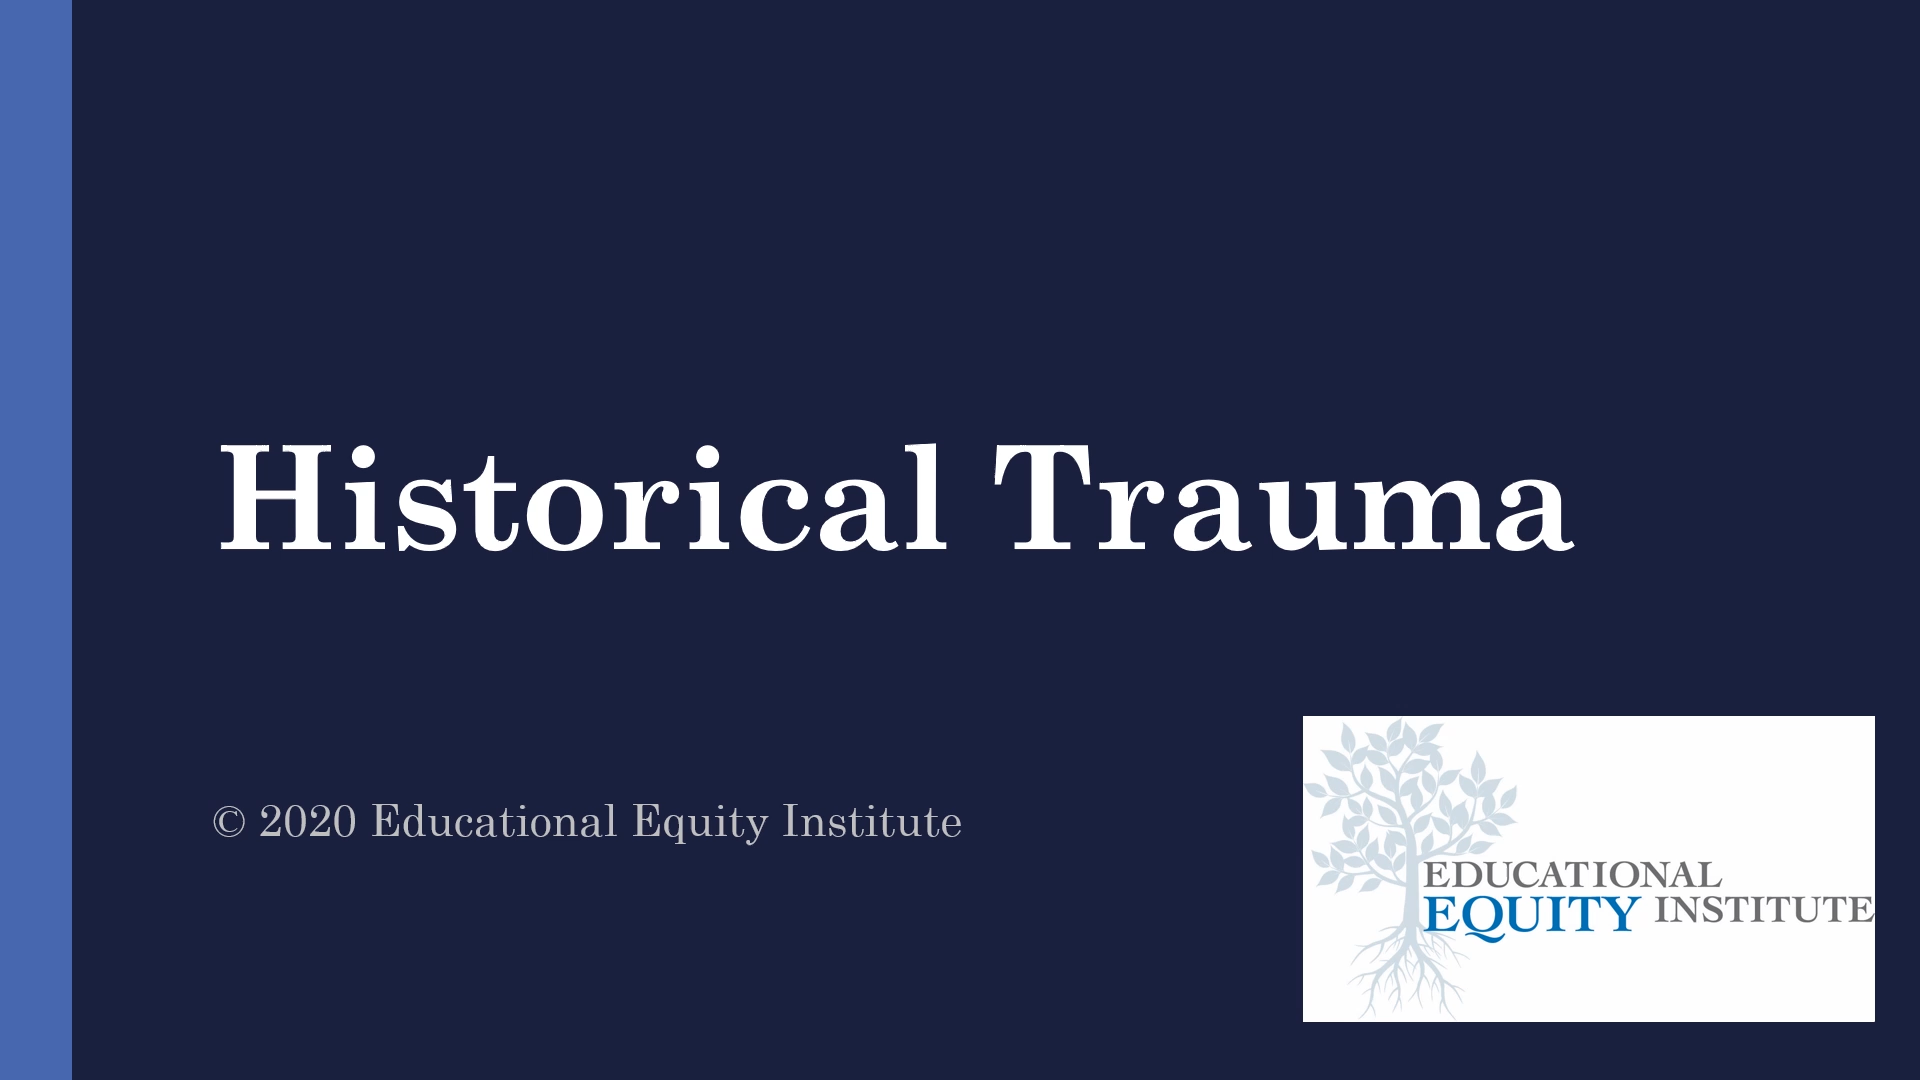 Historical Trauma Training Module